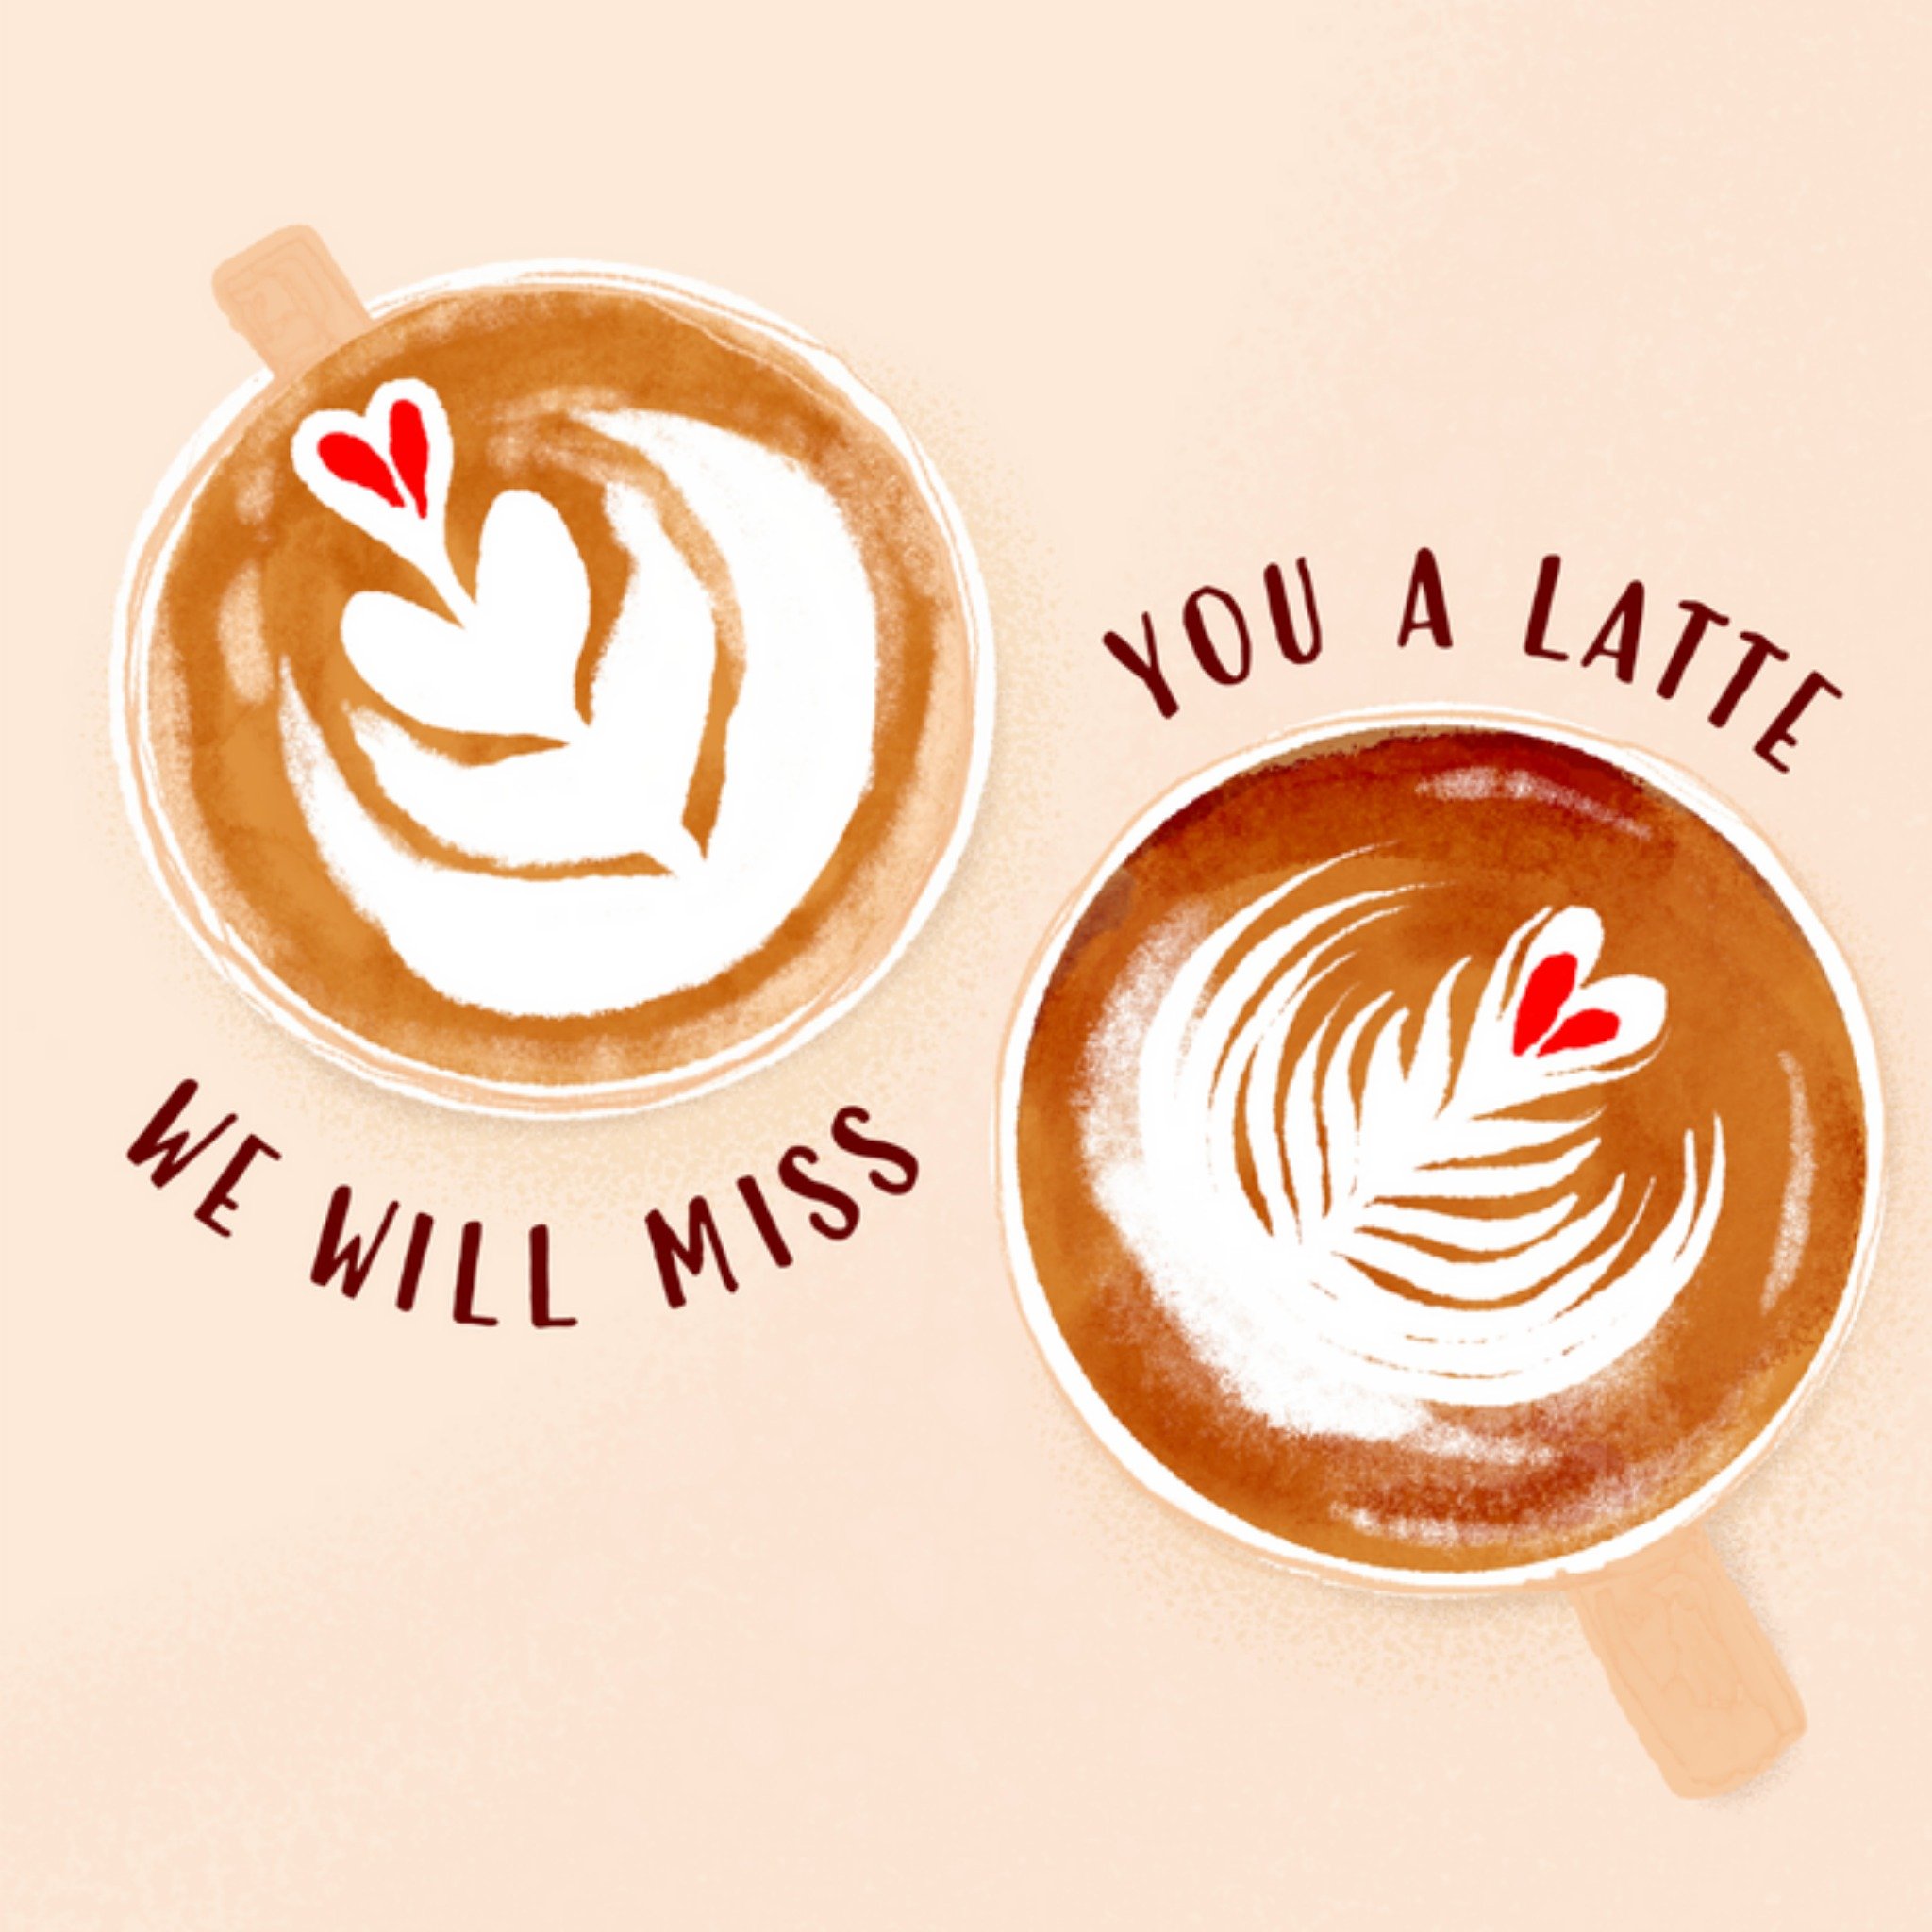 Nieuwe baan - Miss you a latte